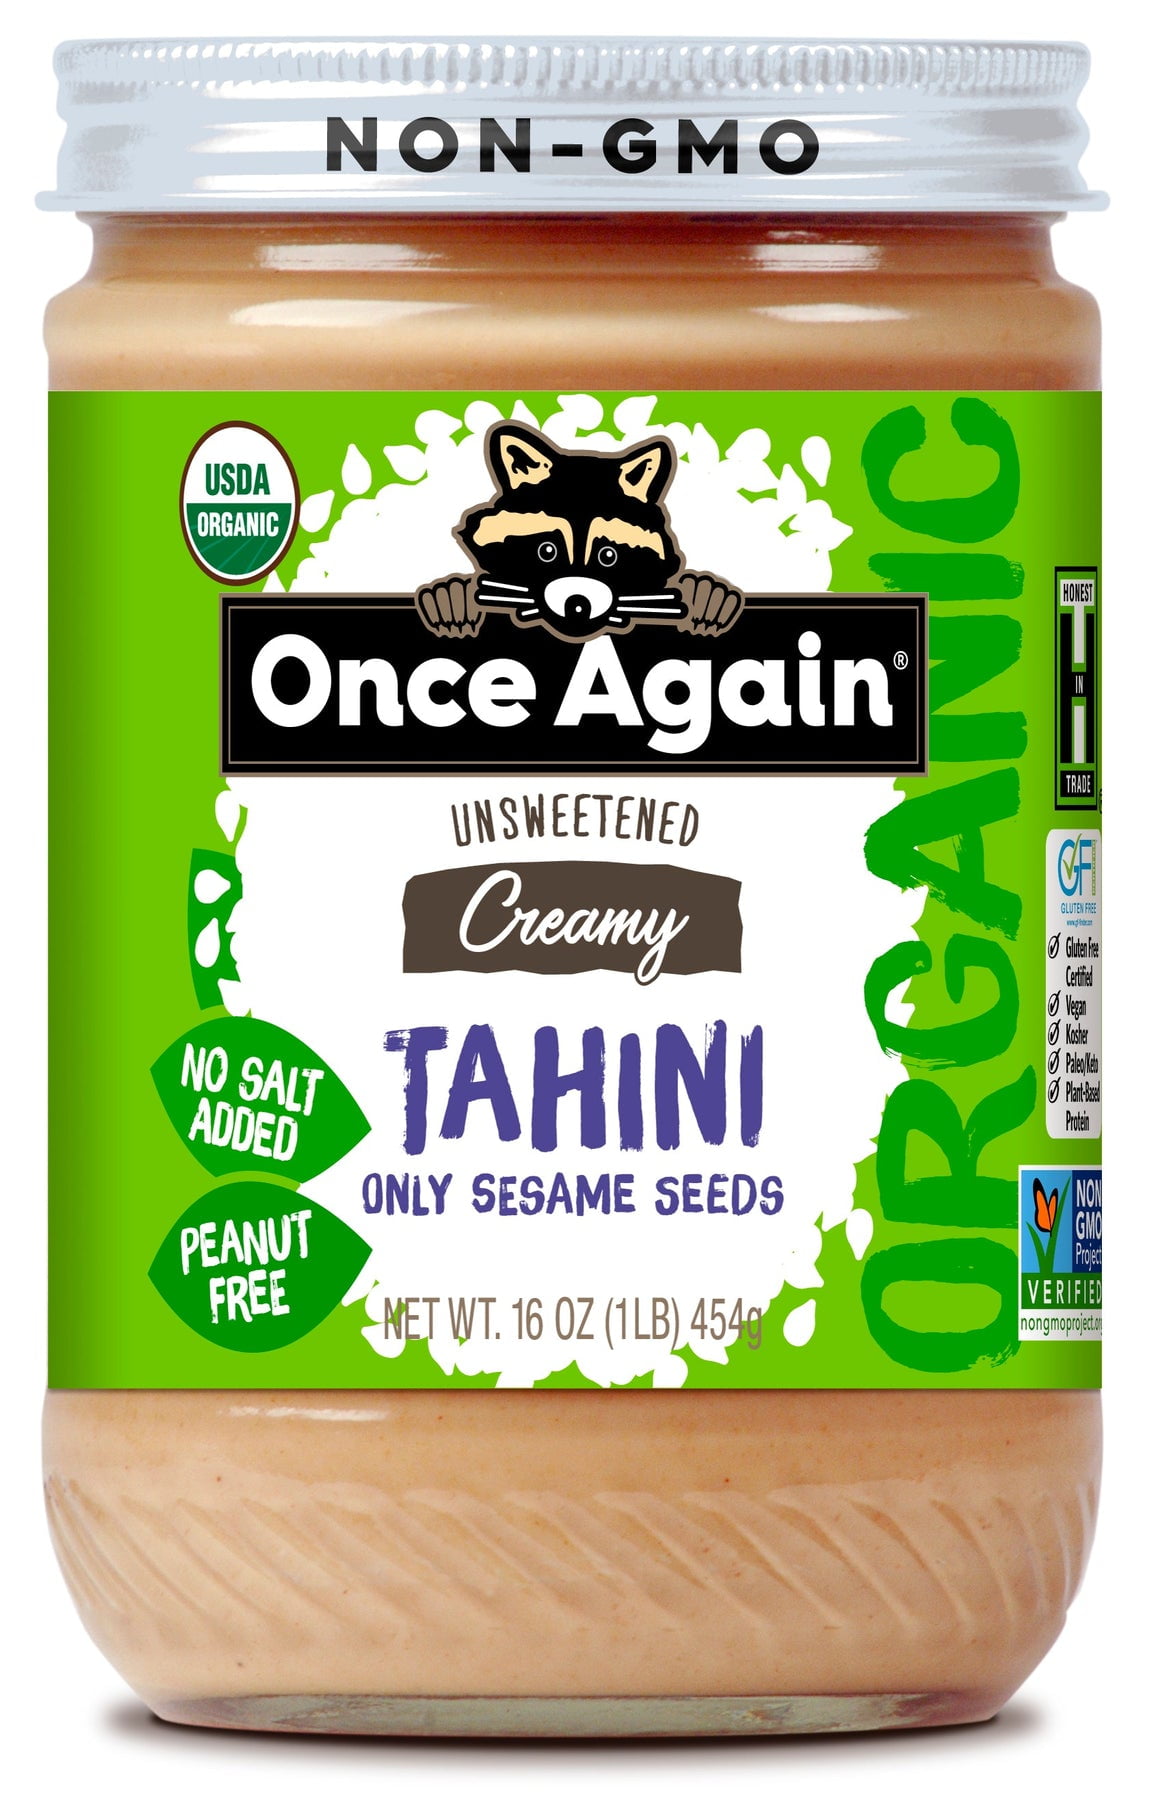 Organic Raw White Sesame Tahini 200g – Sun & Seed